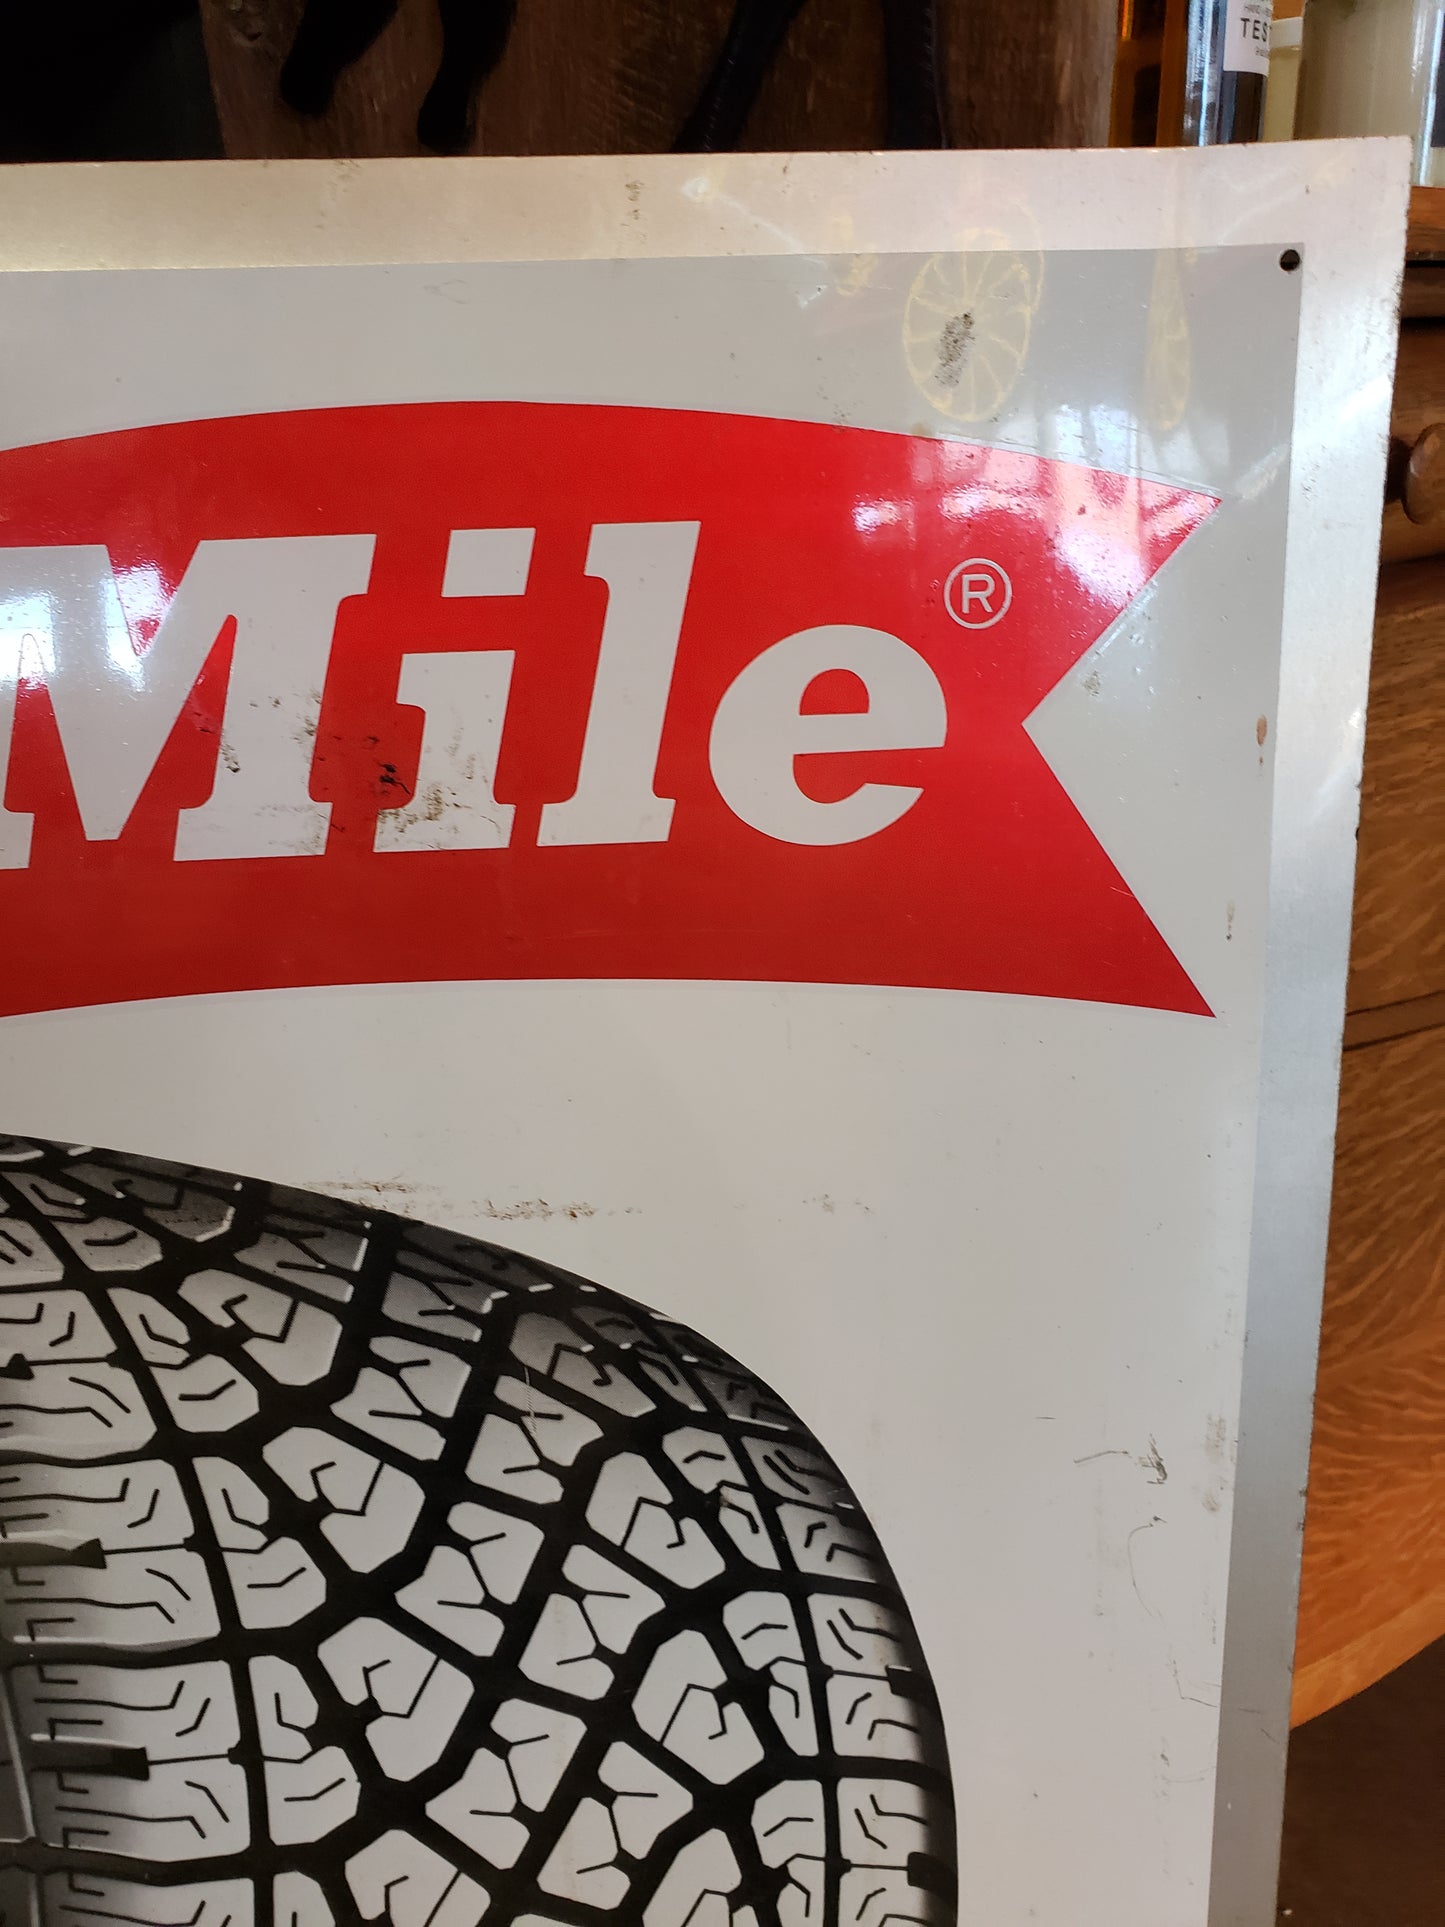 Multi-Mile Tires sign